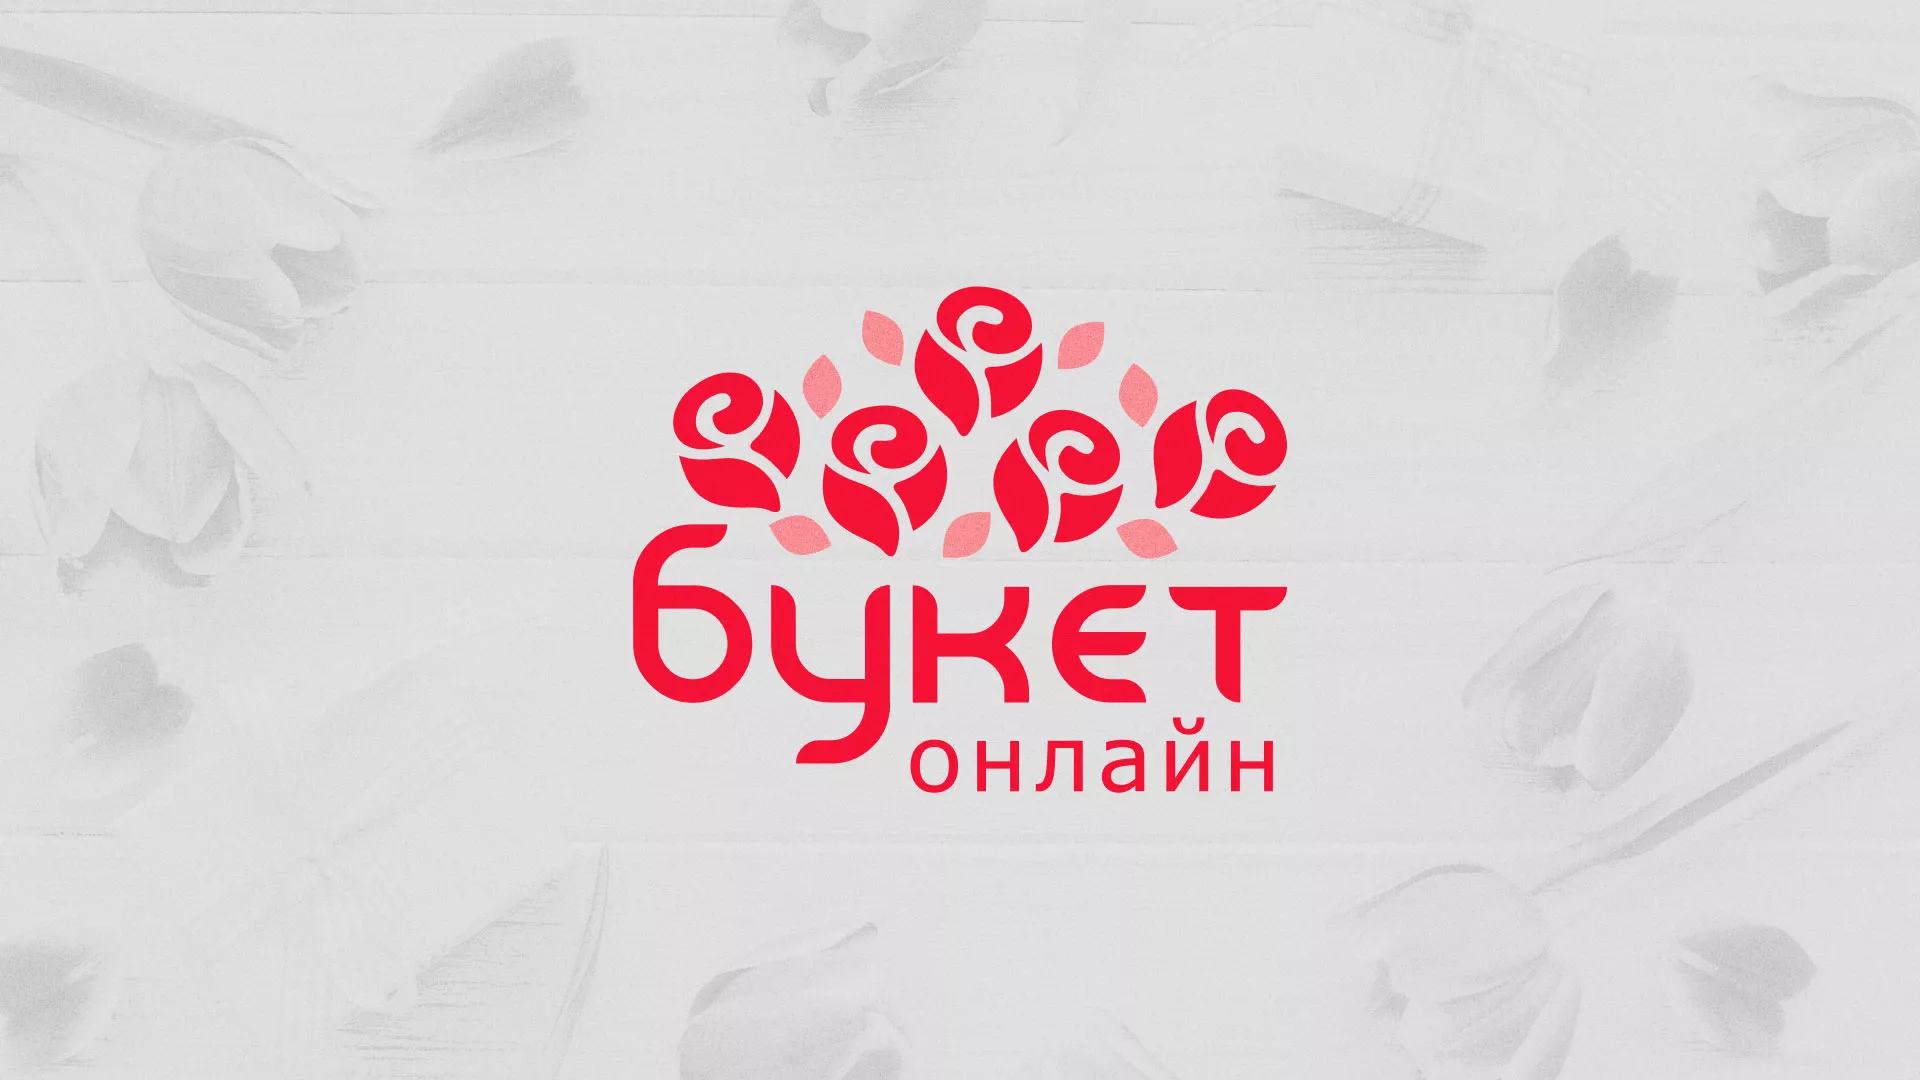 Создание интернет-магазина «Букет-онлайн» по цветам в Кирсанове